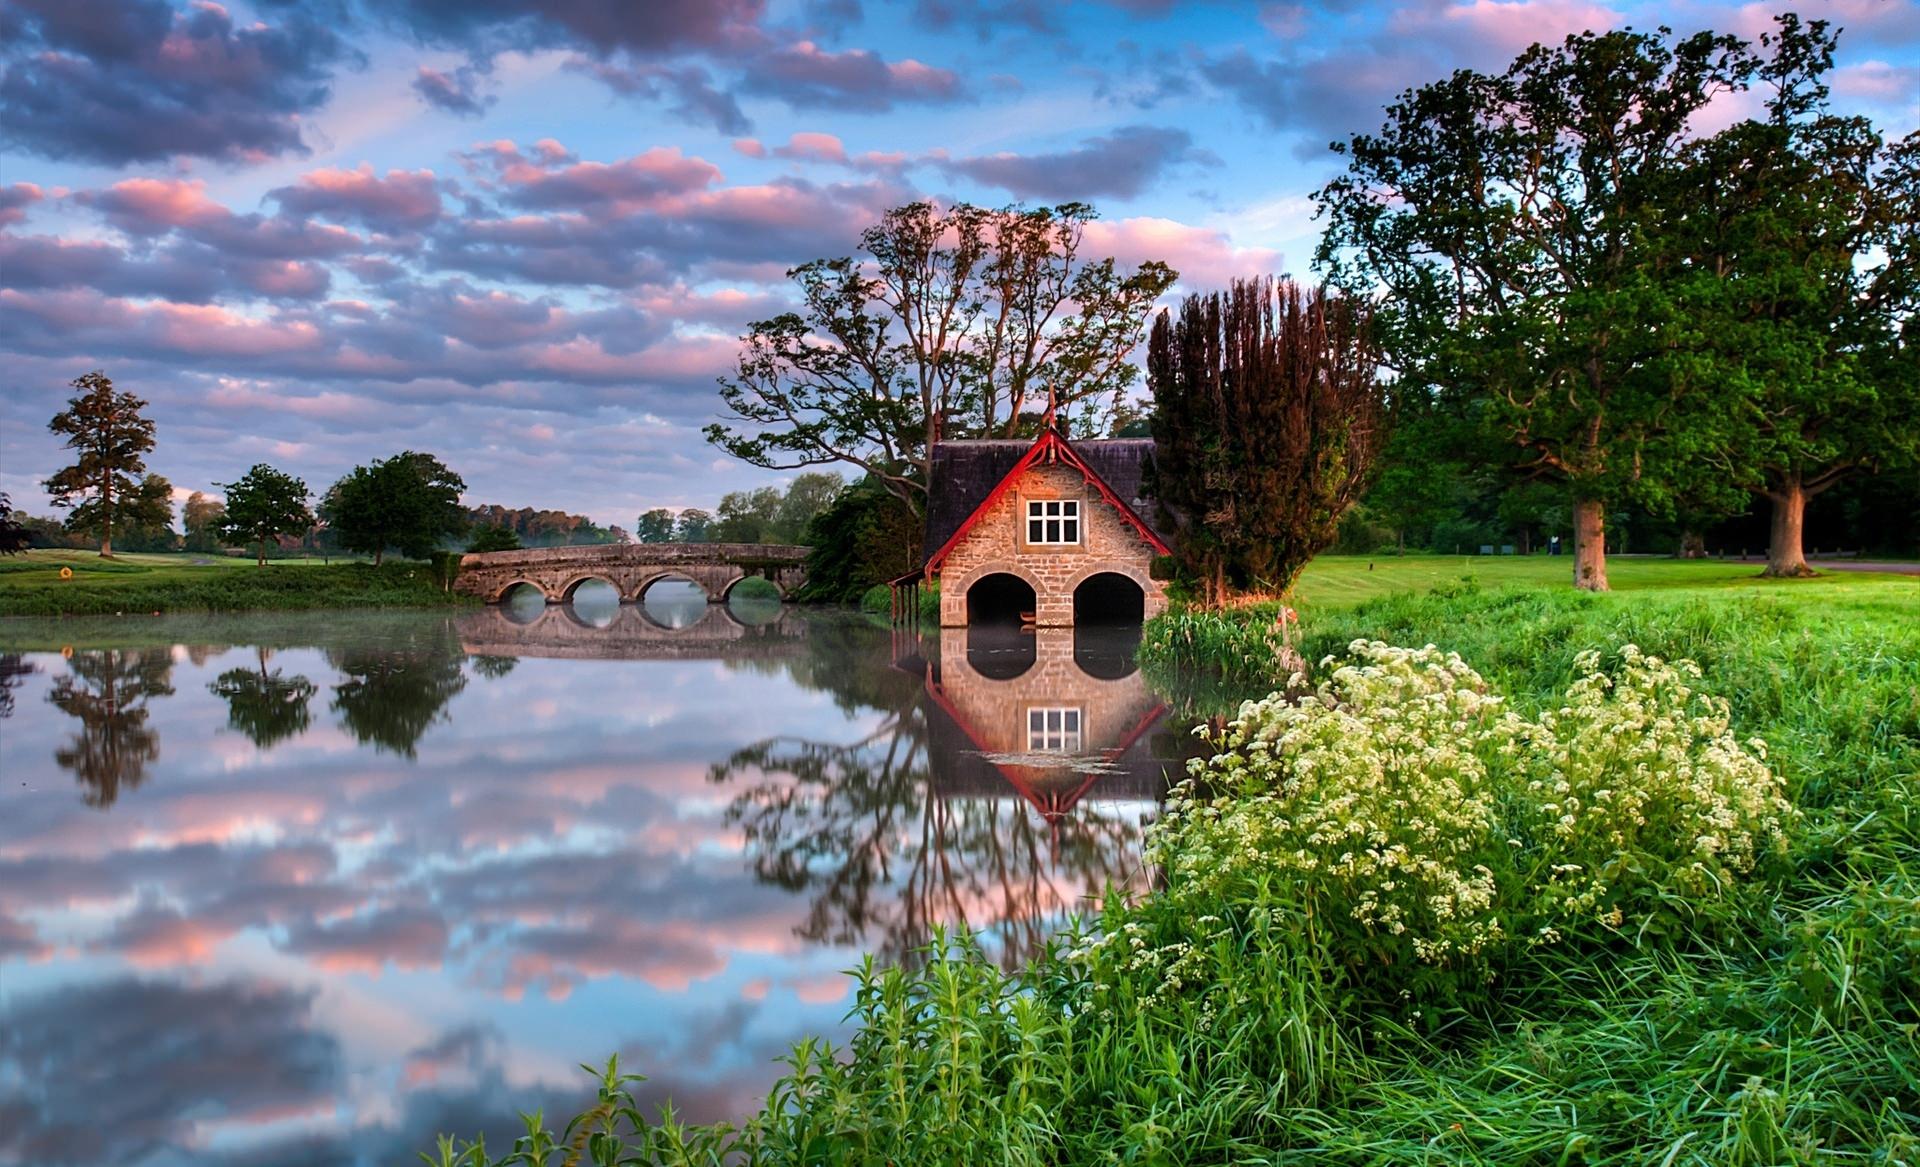 man made, boathouse, bridge, flower, house, lake, reflection, shed, tree phone wallpaper